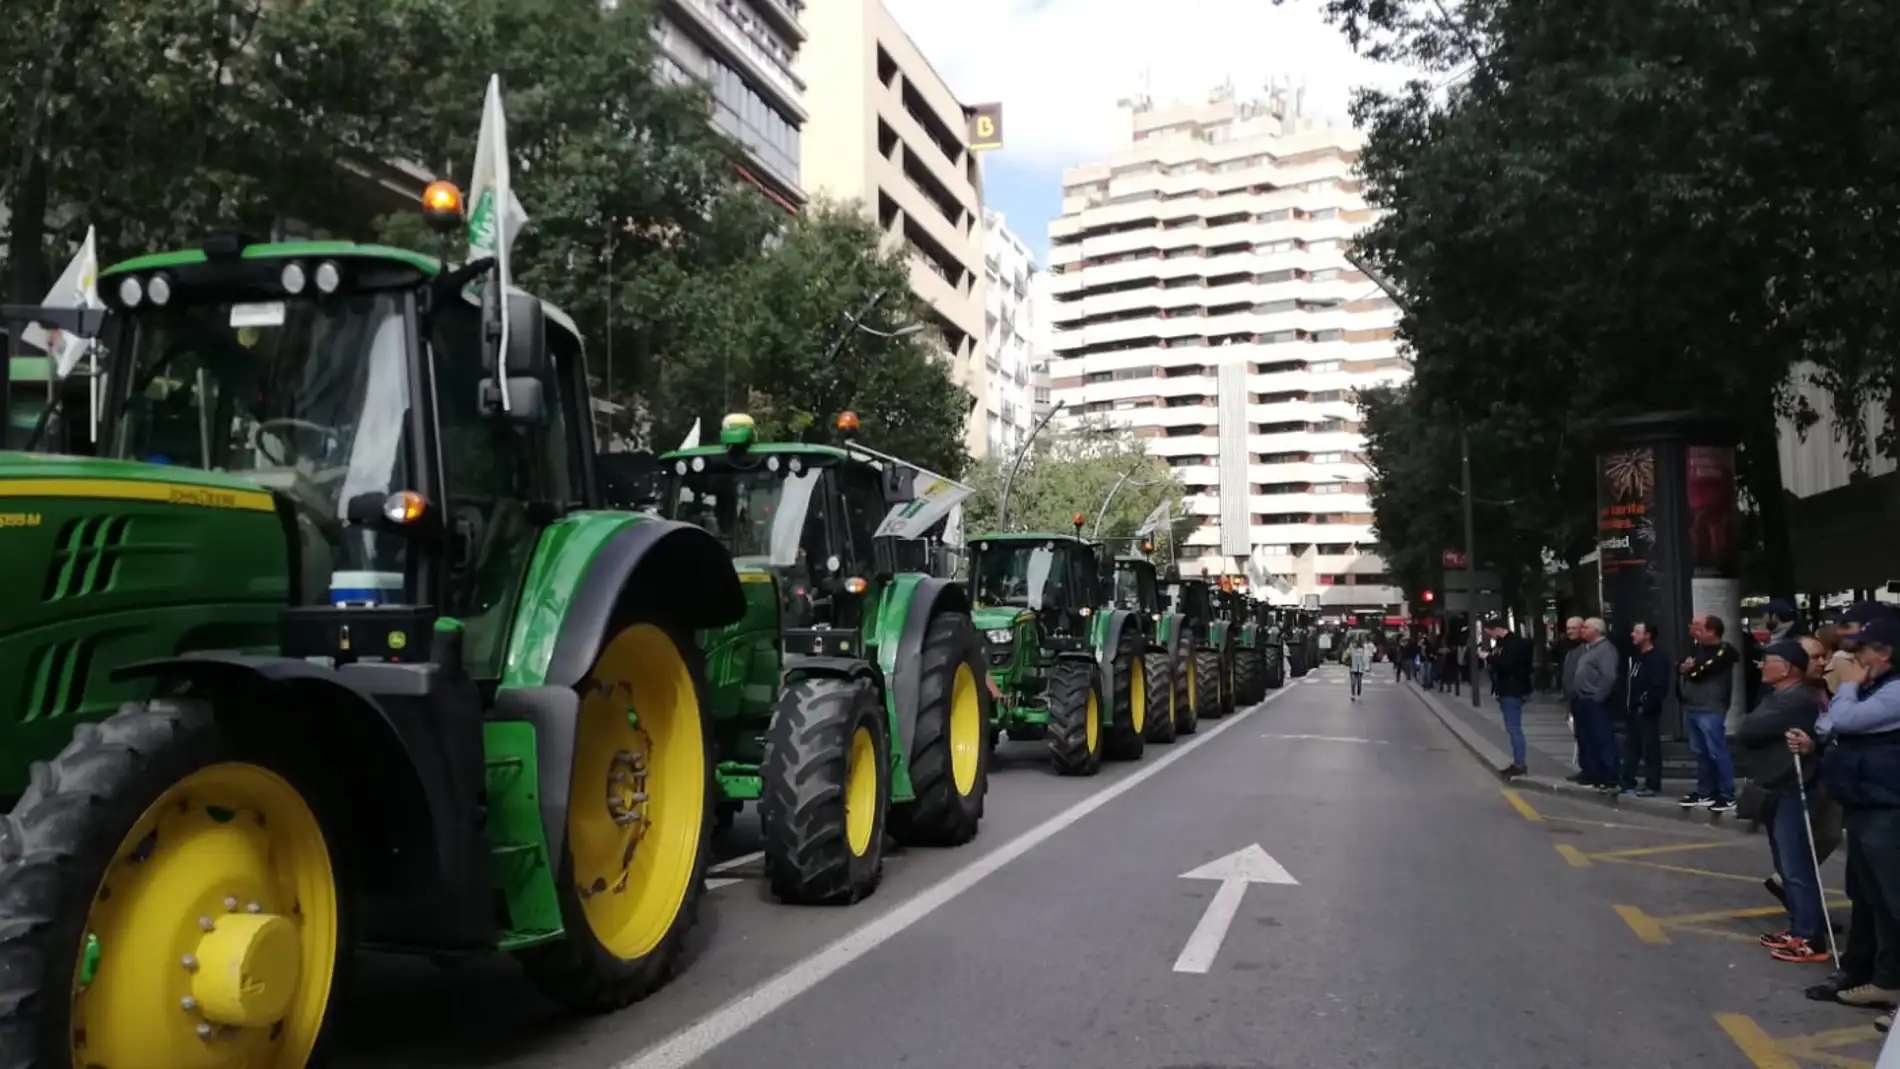 Tractorada en Murcia